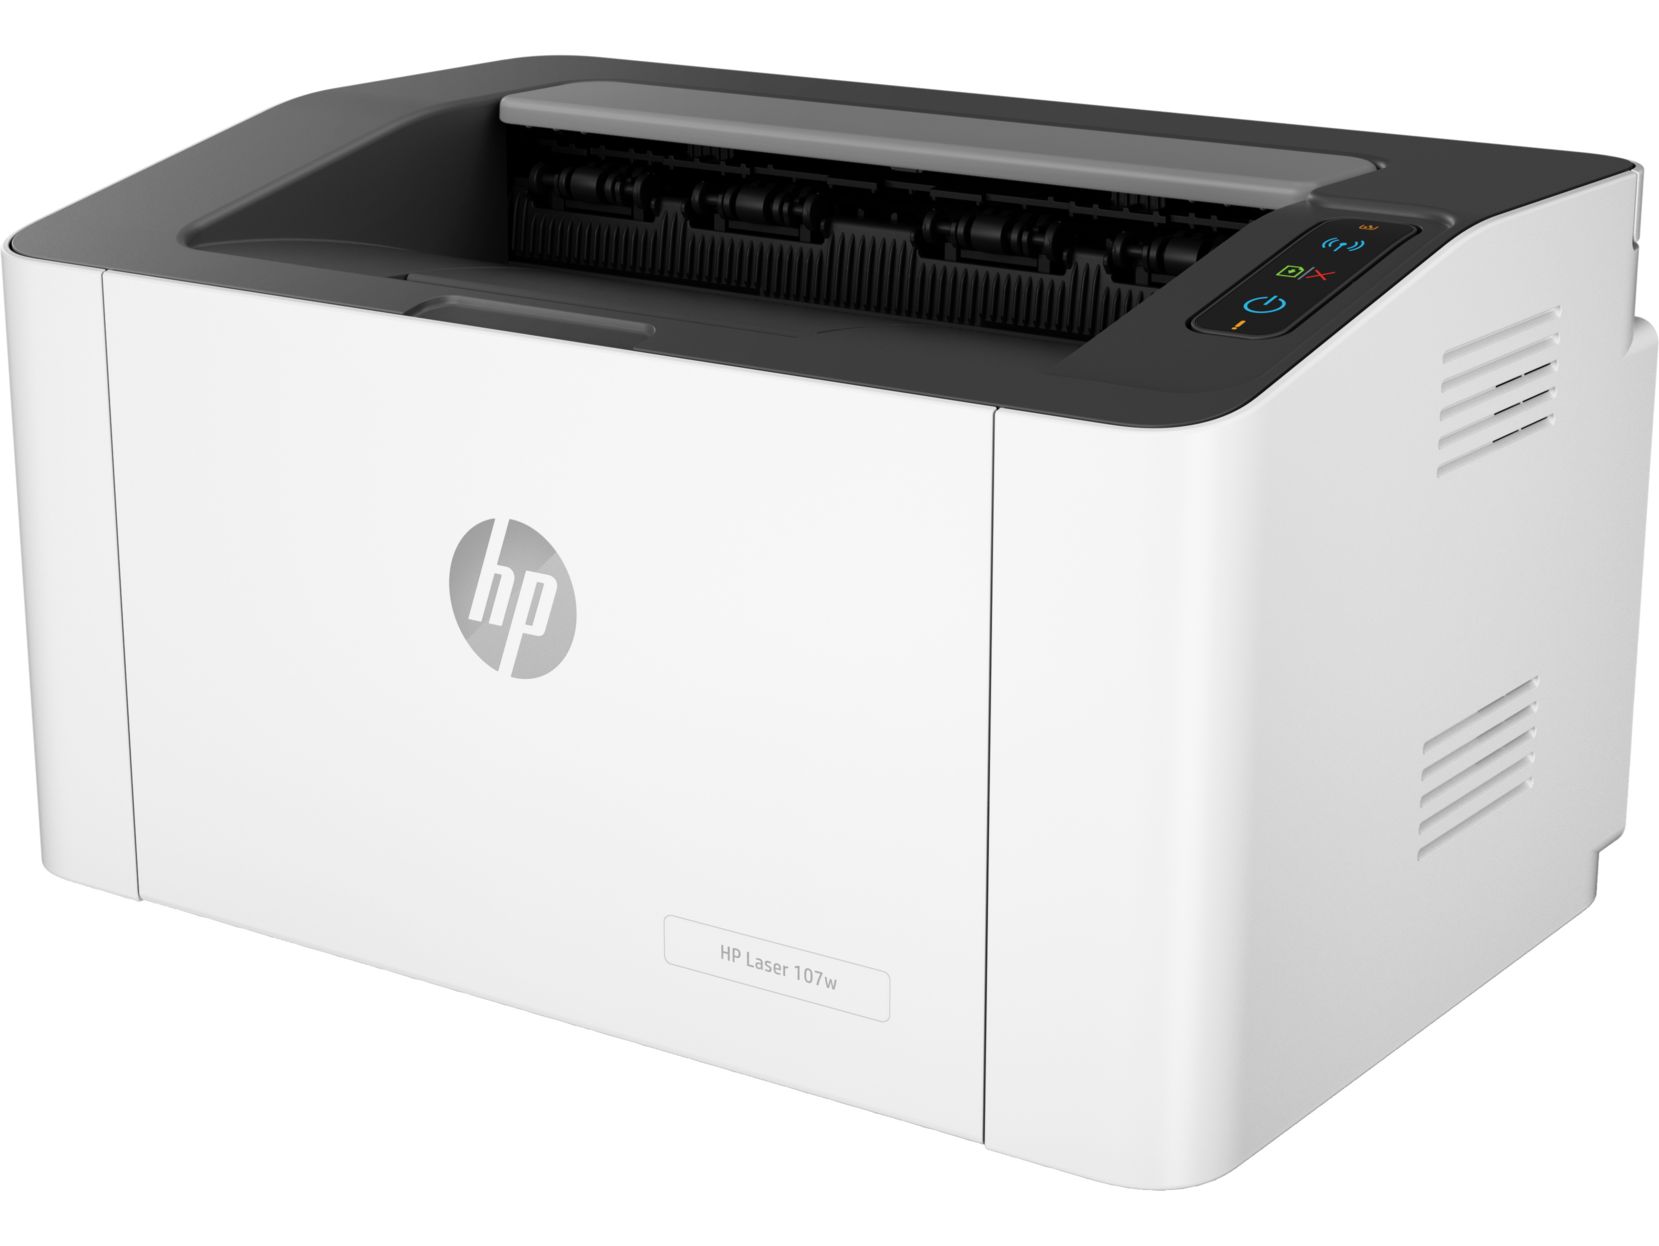 Принтер HP Laser 107w принтер hp laser 107a 4zb77a